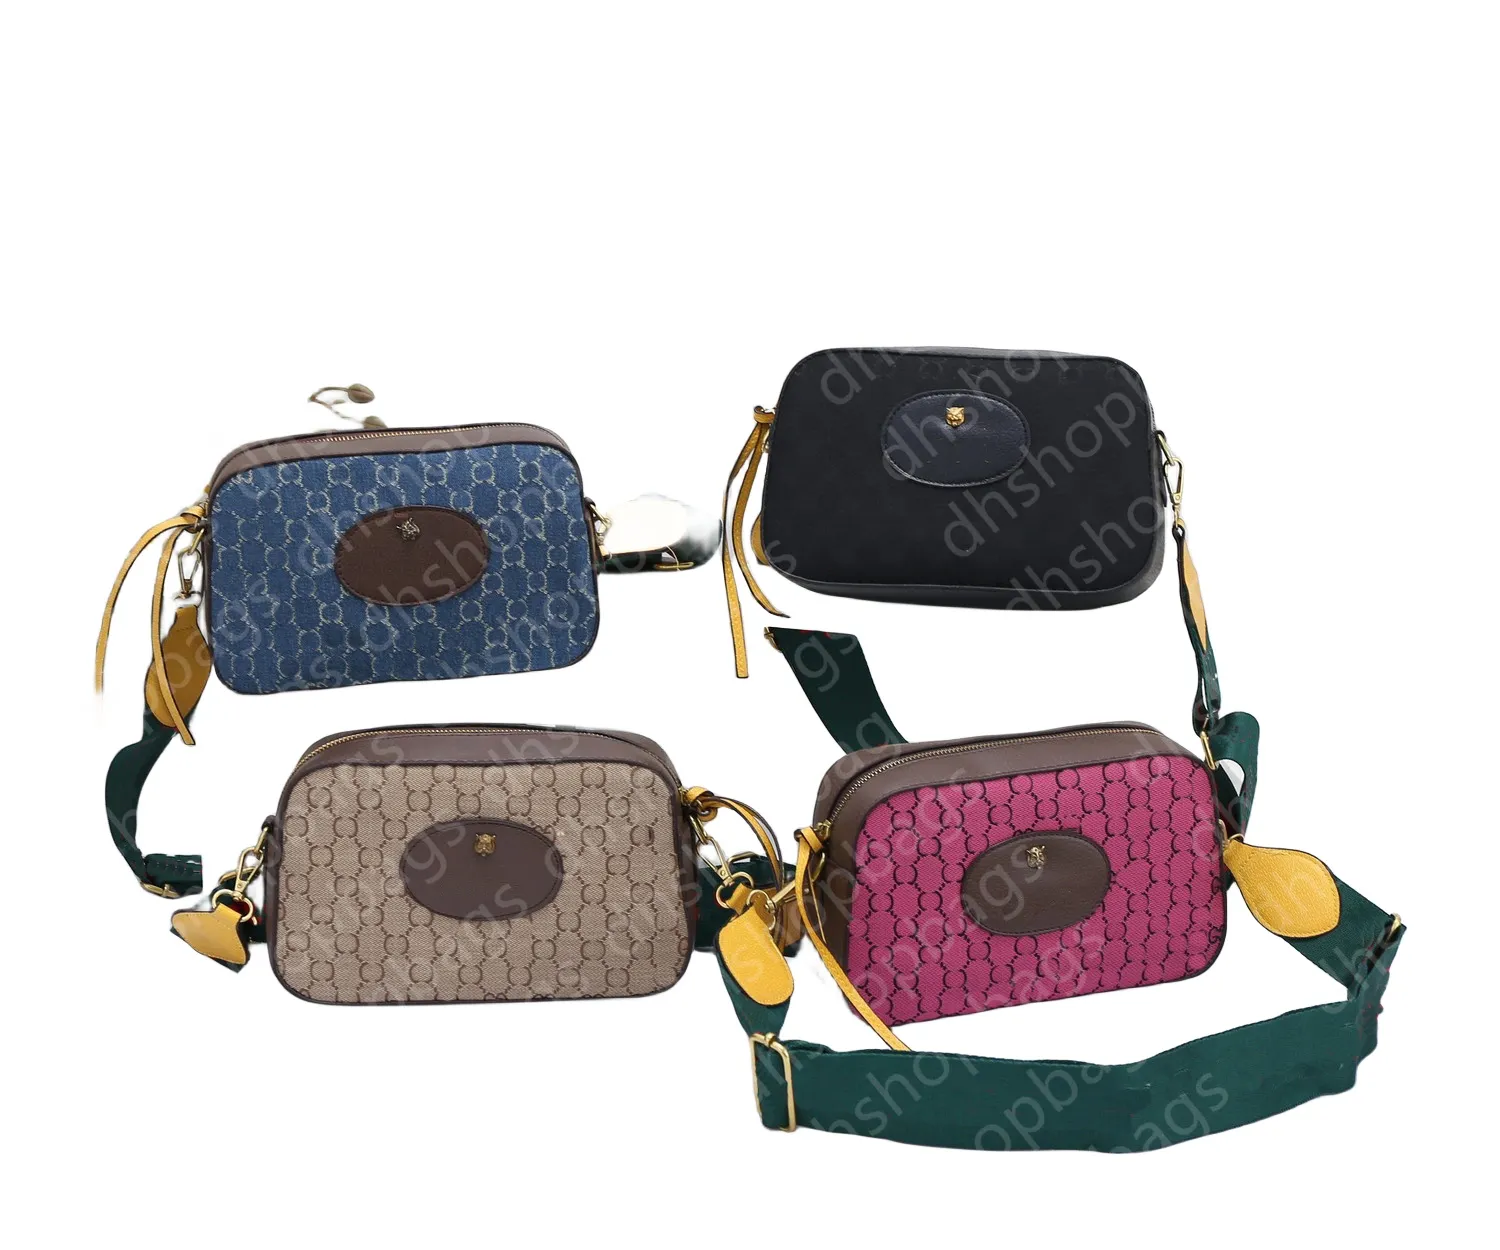 Designer Bag Marmont Soho Women Luxury High Quality Fashionable Messenger Purse Leather Exquisite Handmade Cross body Camera Bag Shoulder Saddle Wallet Tote